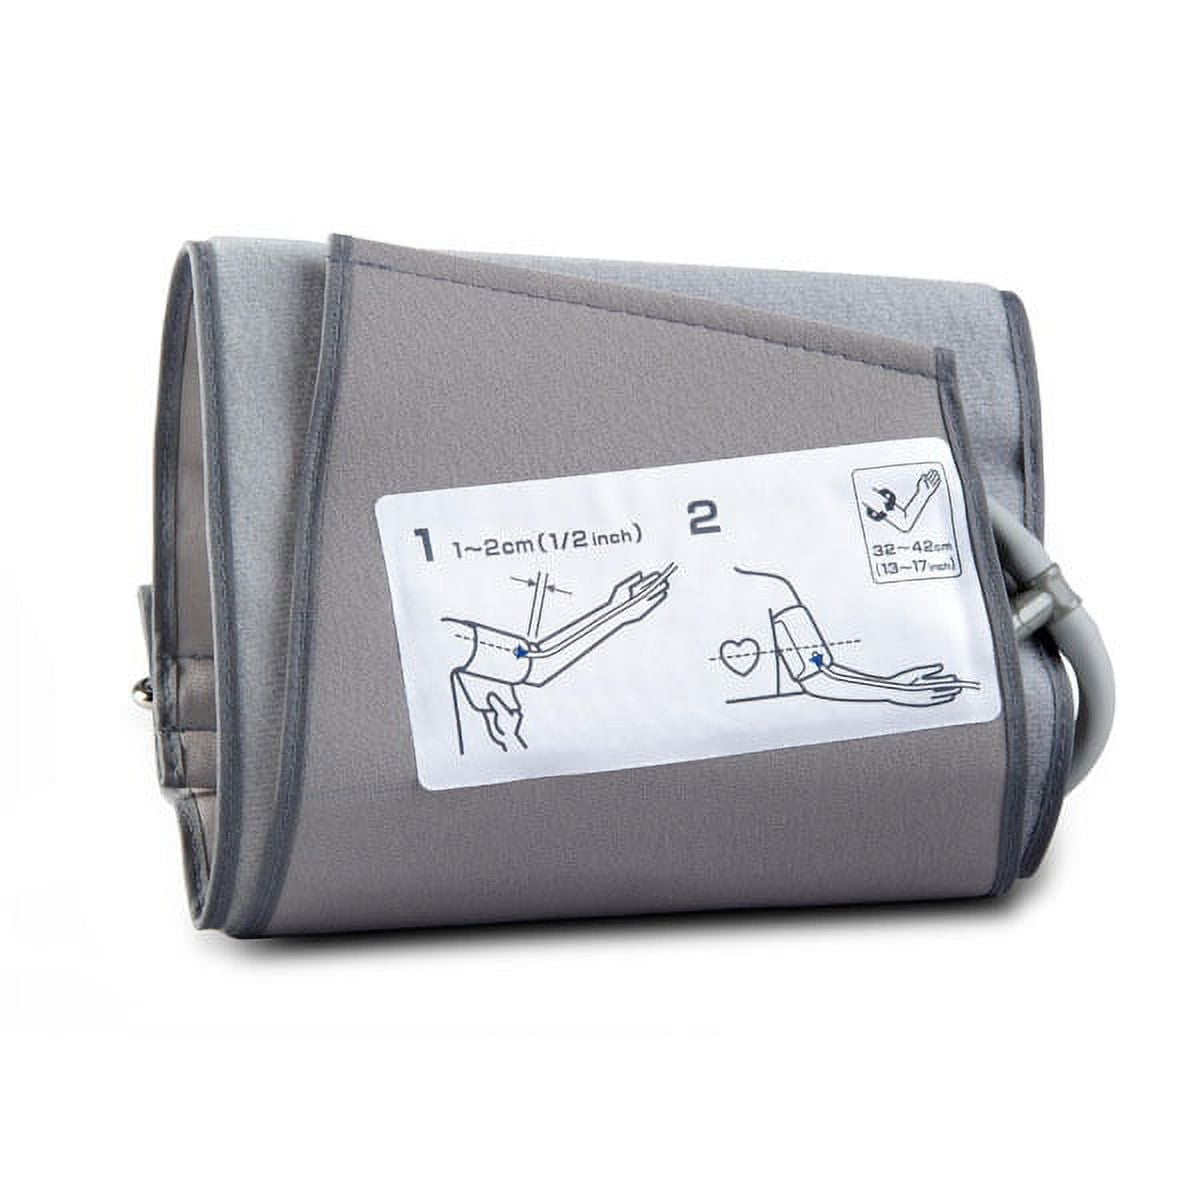 Blood pressure cuff - D-ring - Boso, Bosch + Sohn - latex-free / Velcro® /  washable